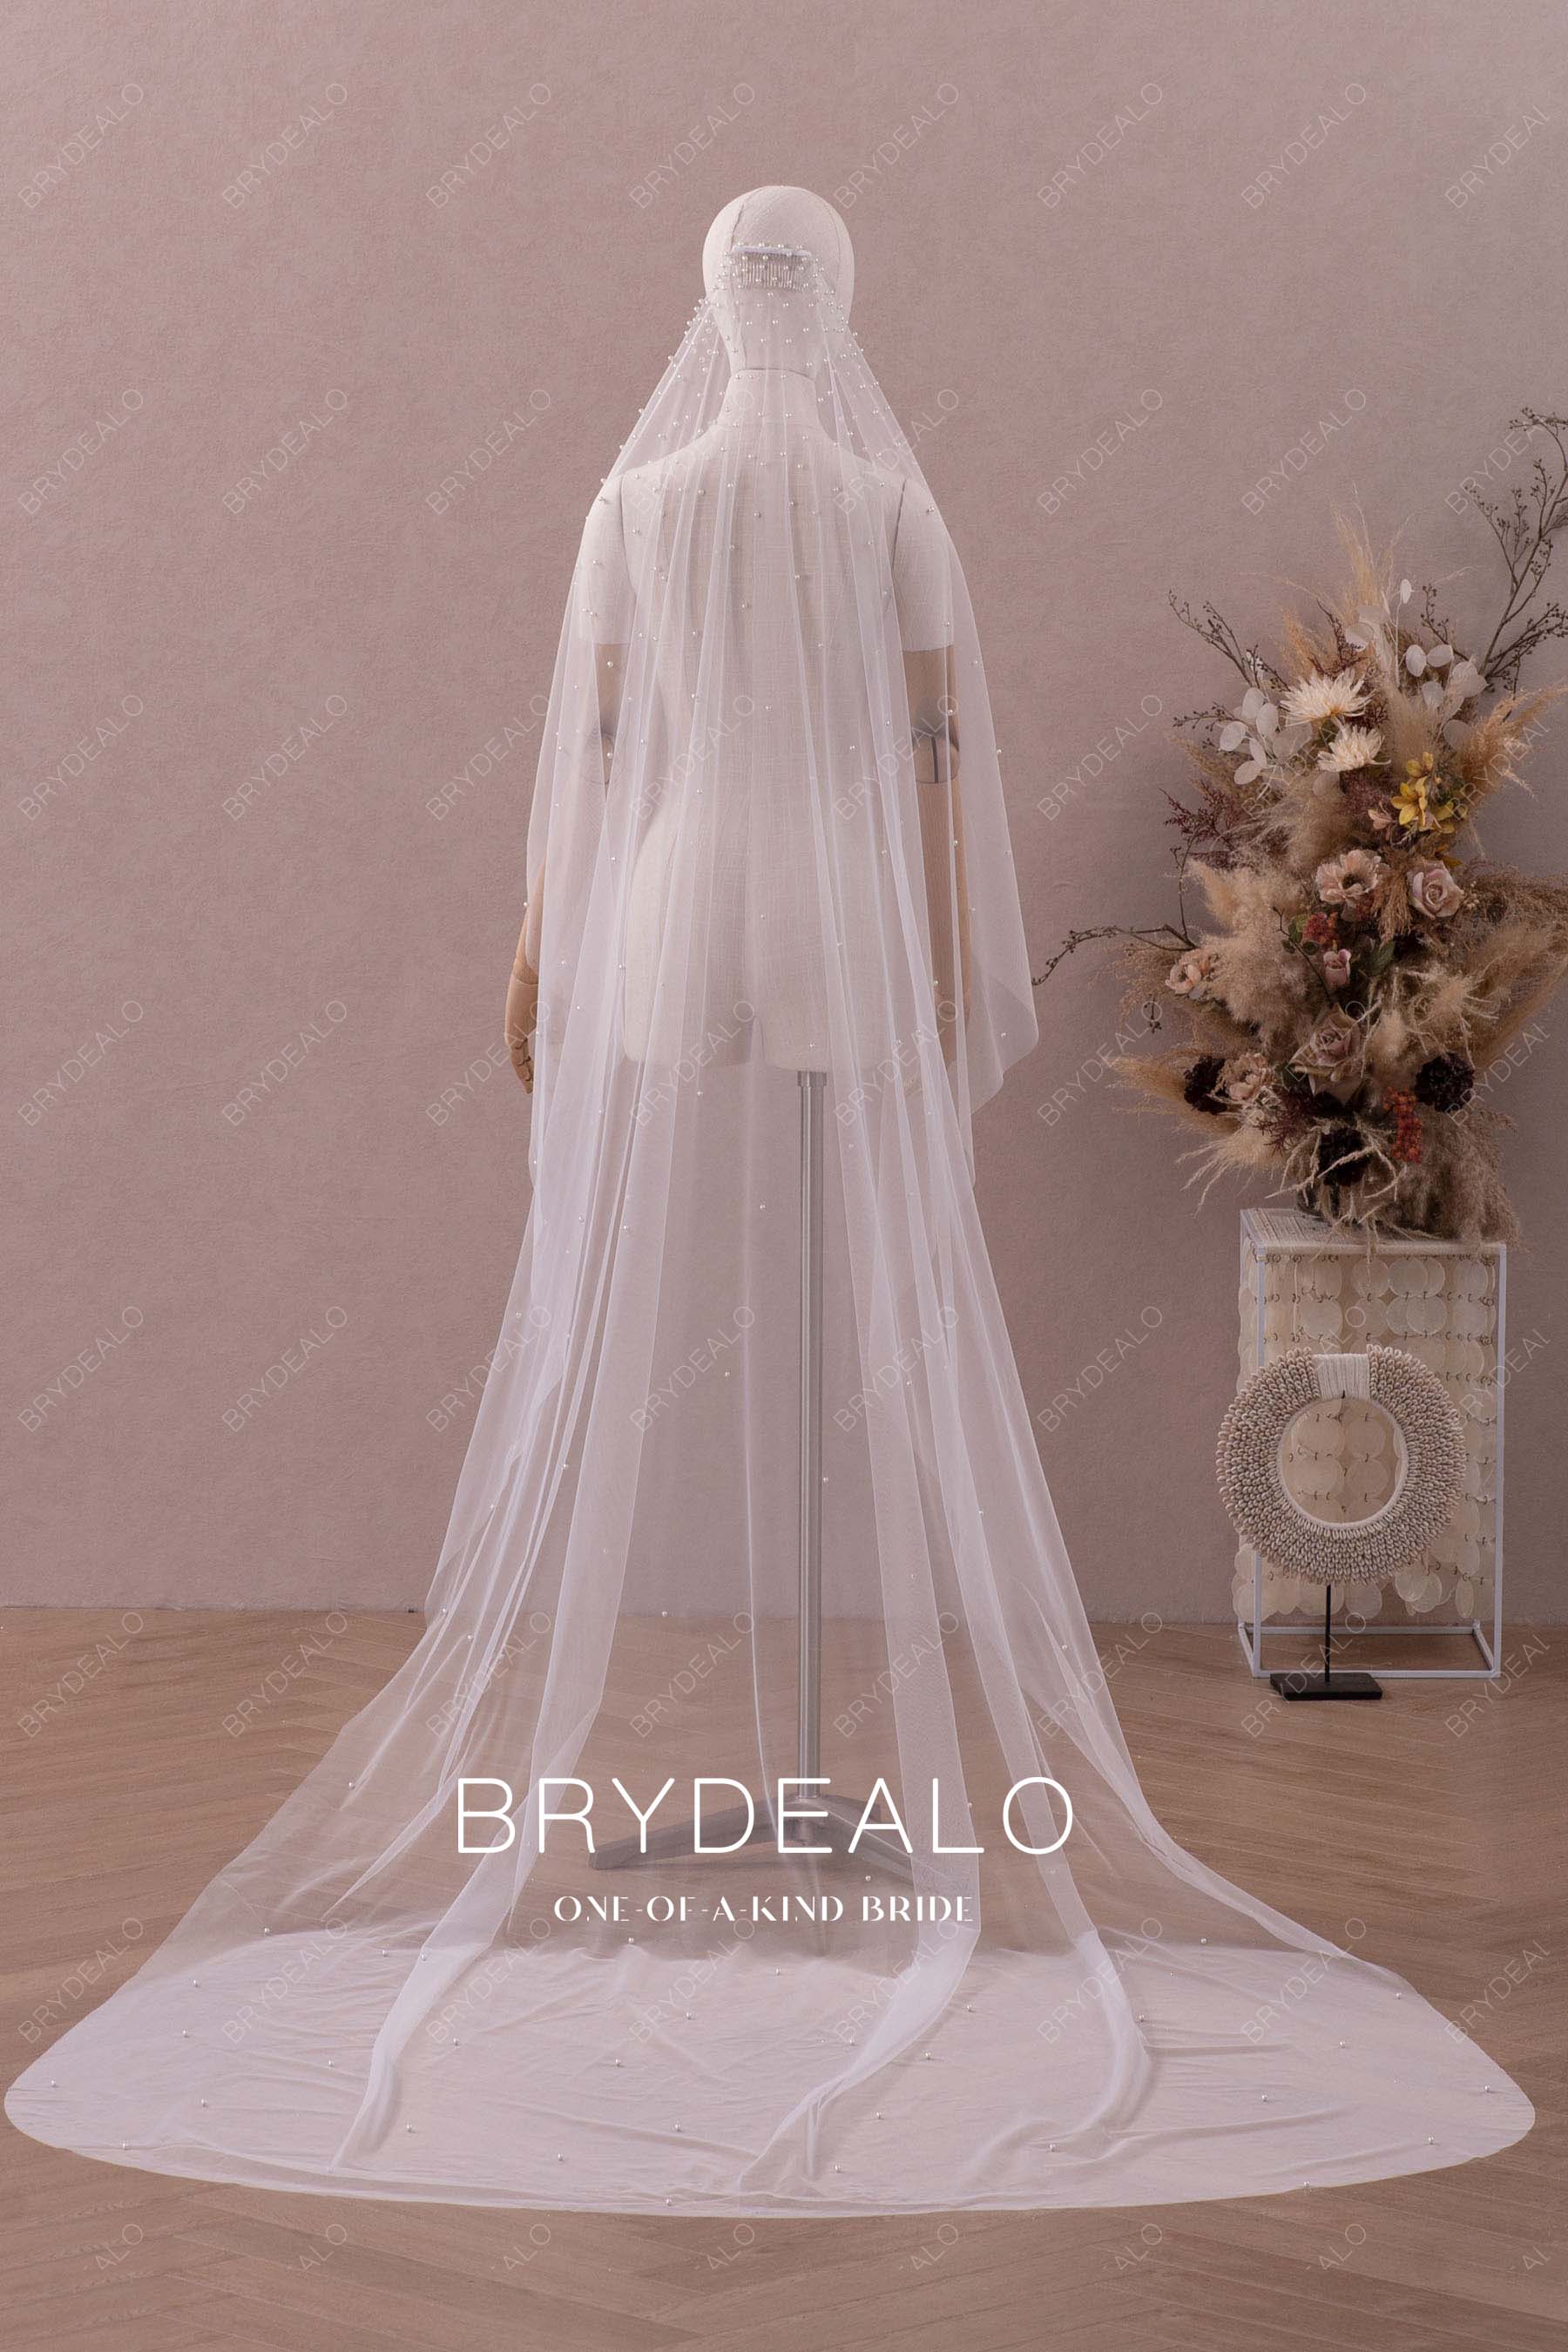 Brydealo Factory Chapel Length Rhinestone Tulle Wedding Veil